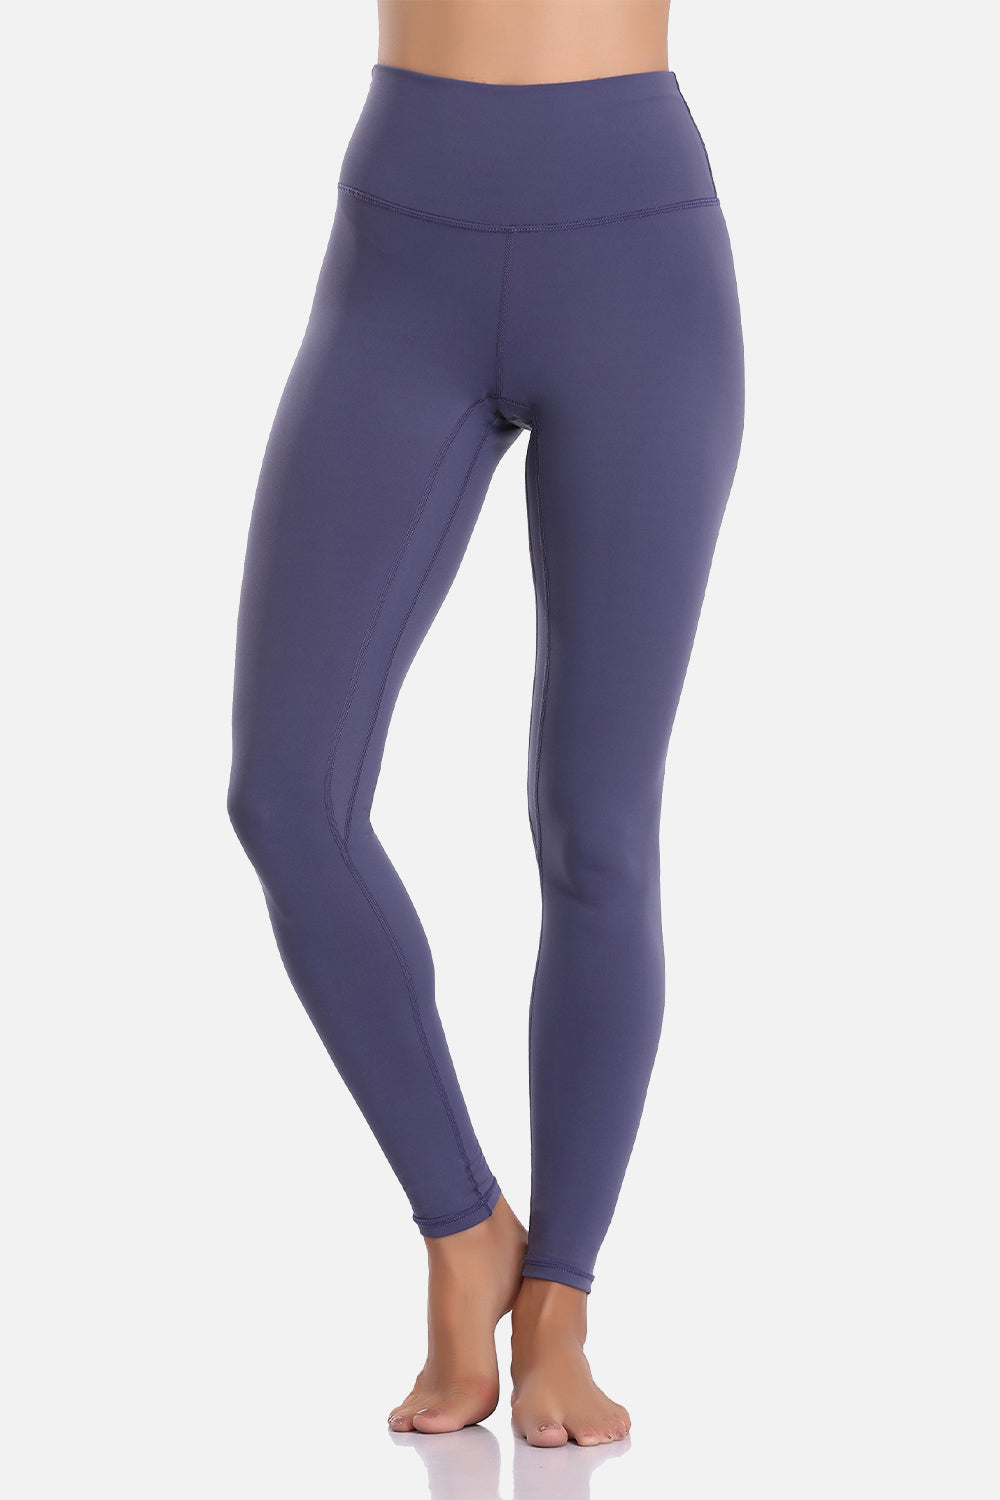 Colorfulkoala Women's Buttery Soft High Waisted Yoga Pants Full-Length ...